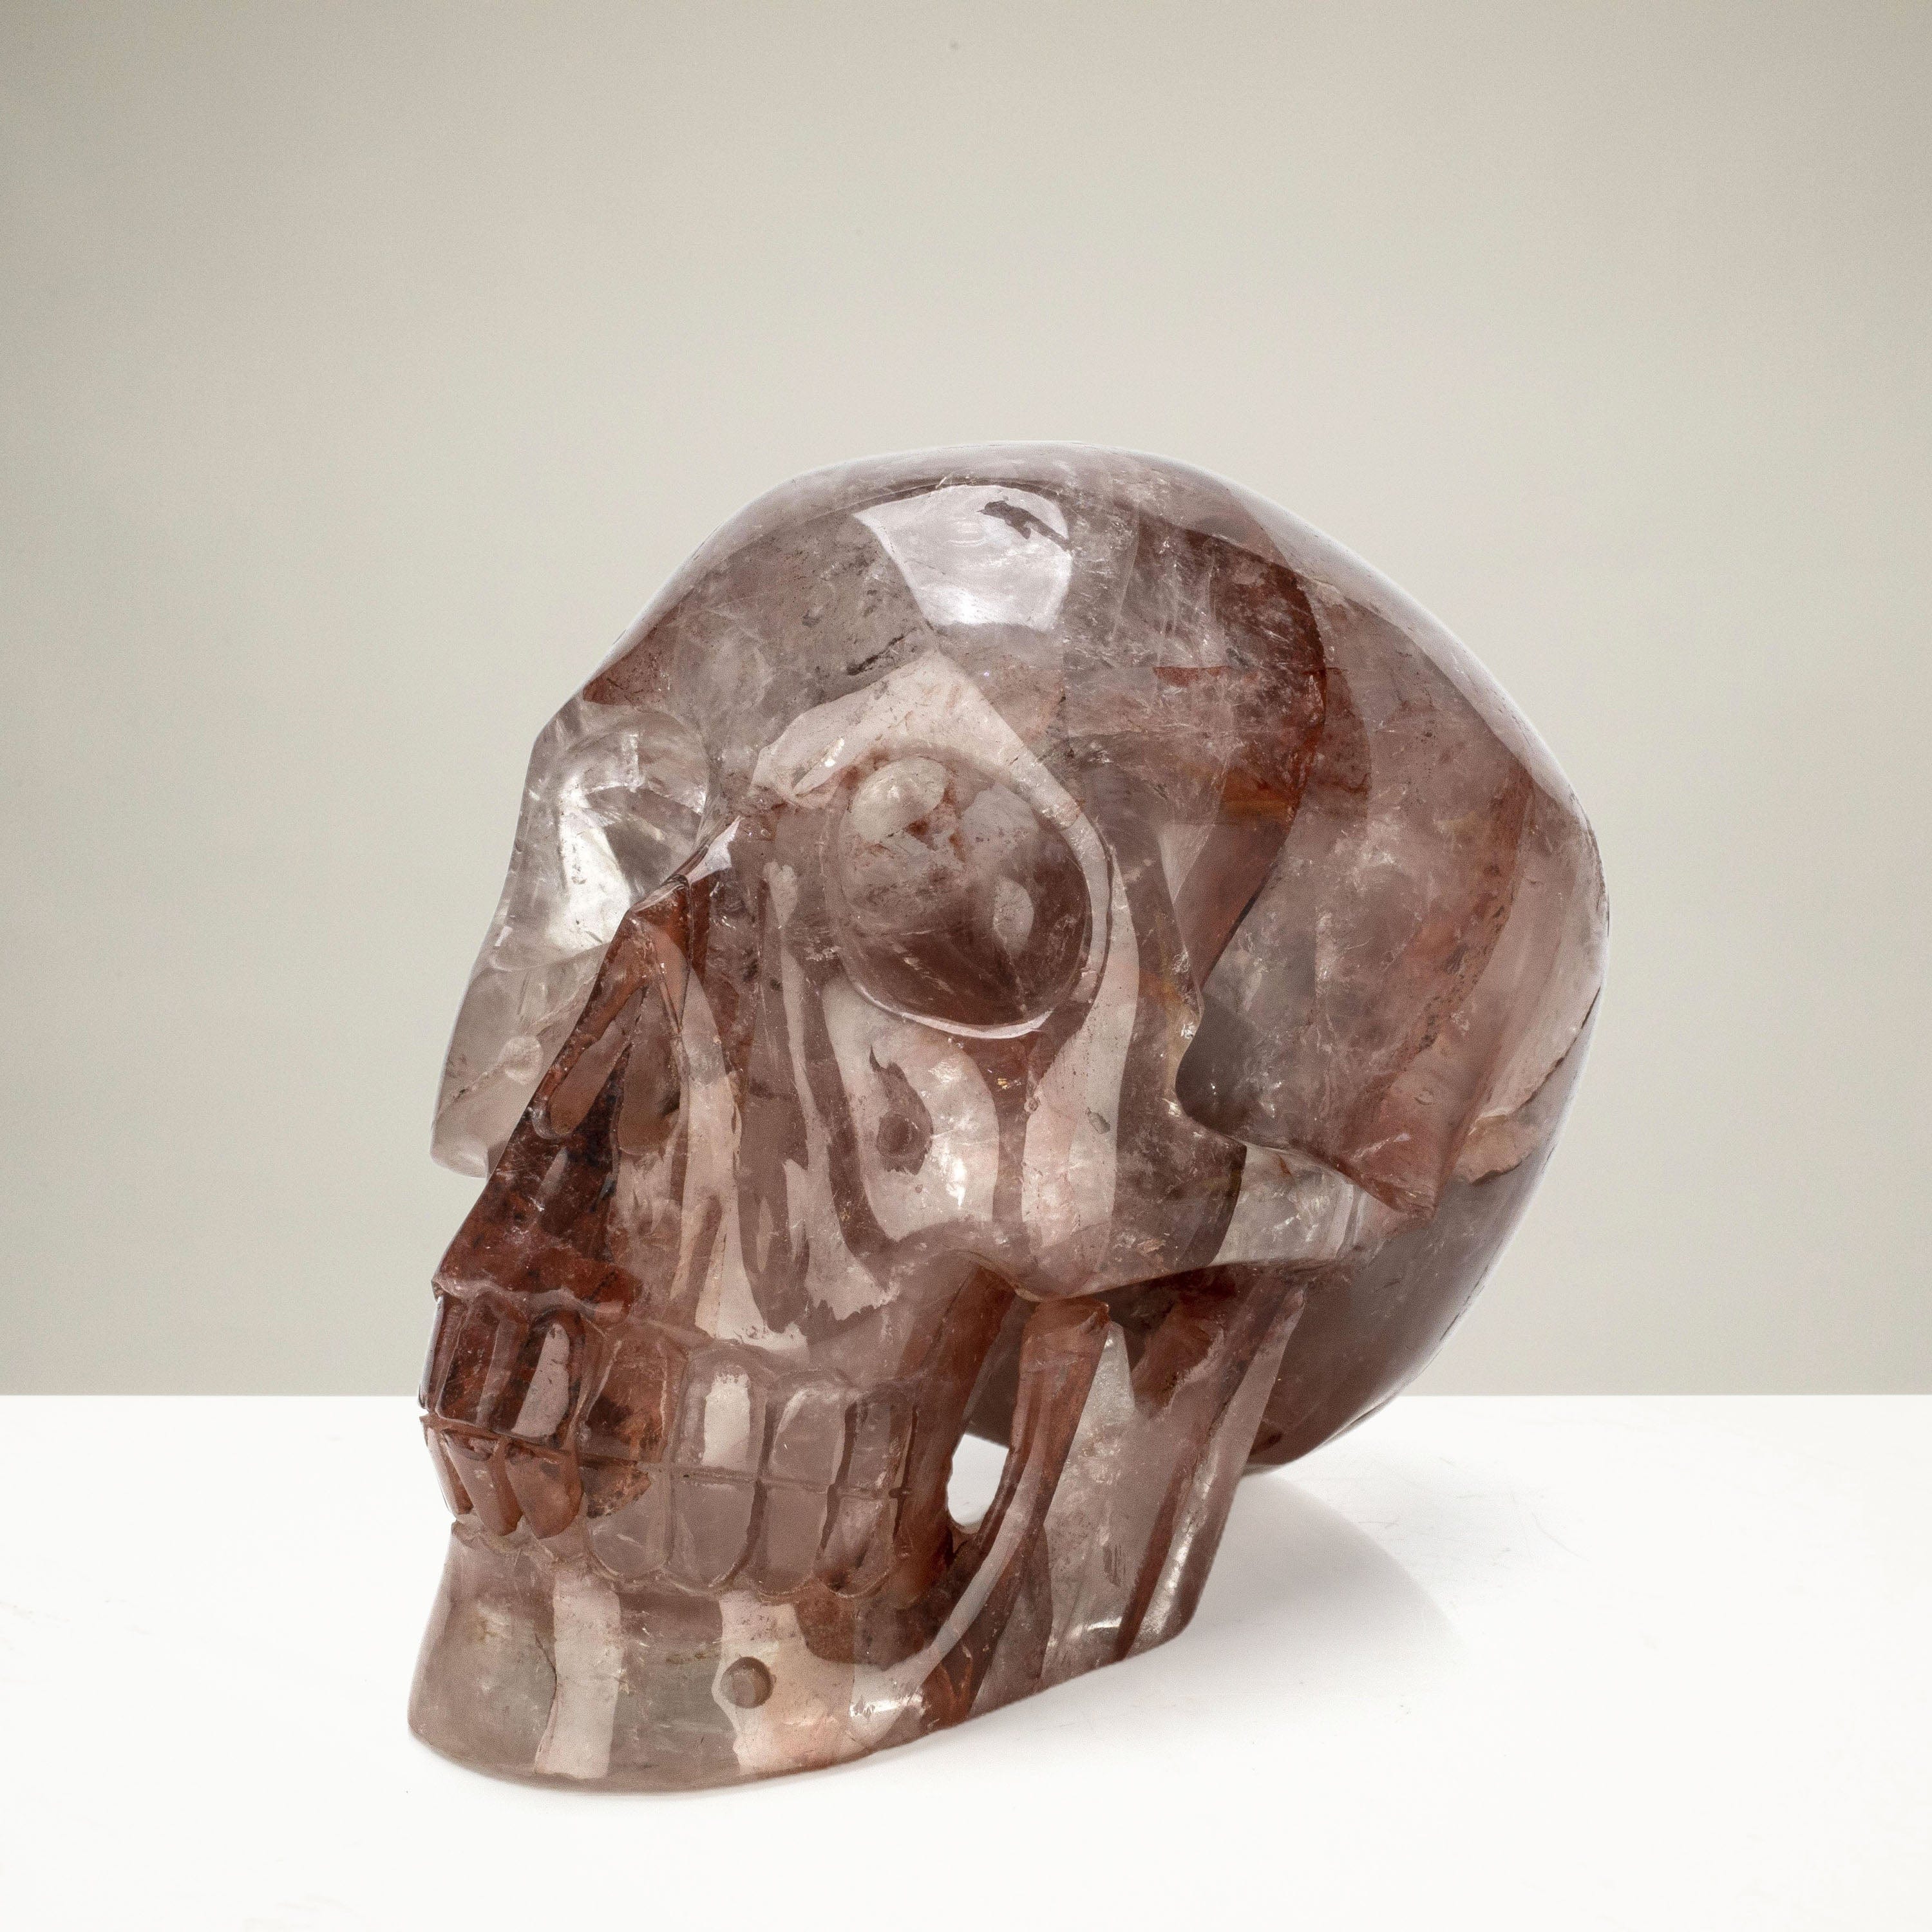 Kalifano Quartz Natural Hand Carved Brazilian Hematoid Quartz Skull - 4.75 in. / 1,160 grams SK5000.002